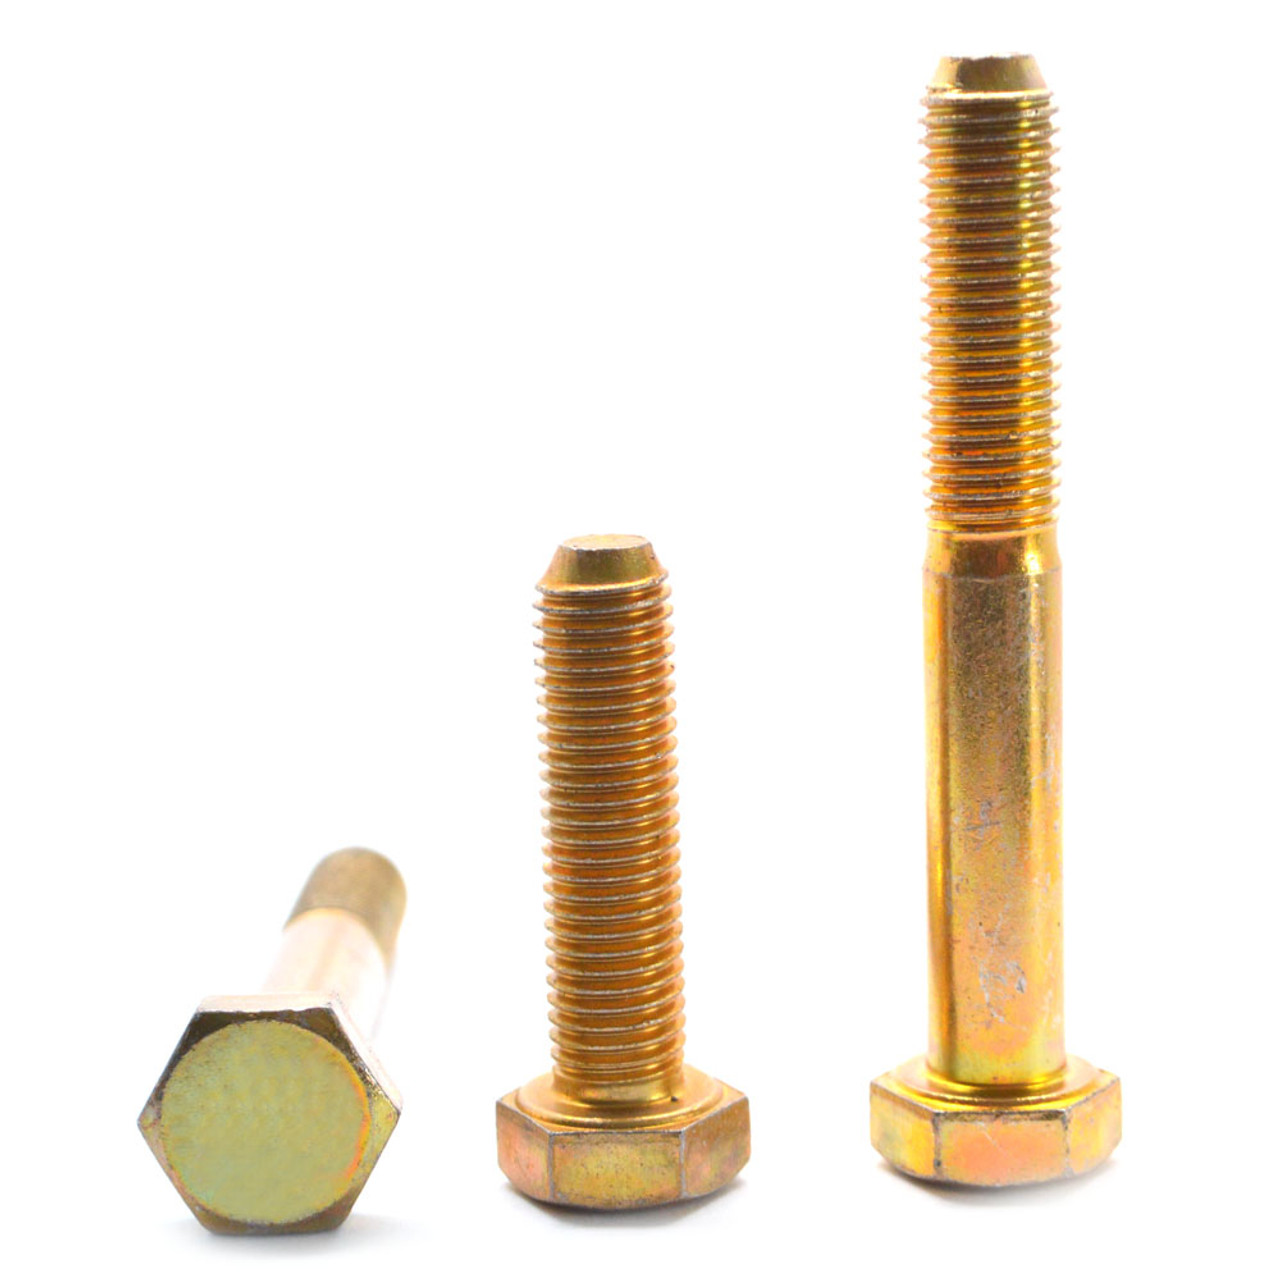 M14 x 2.00 x 120 MM (PT) Coarse Thread ISO 4014 Class 10.9 Hex Cap Screw (Bolt) Alloy Steel Yellow Zinc Plated